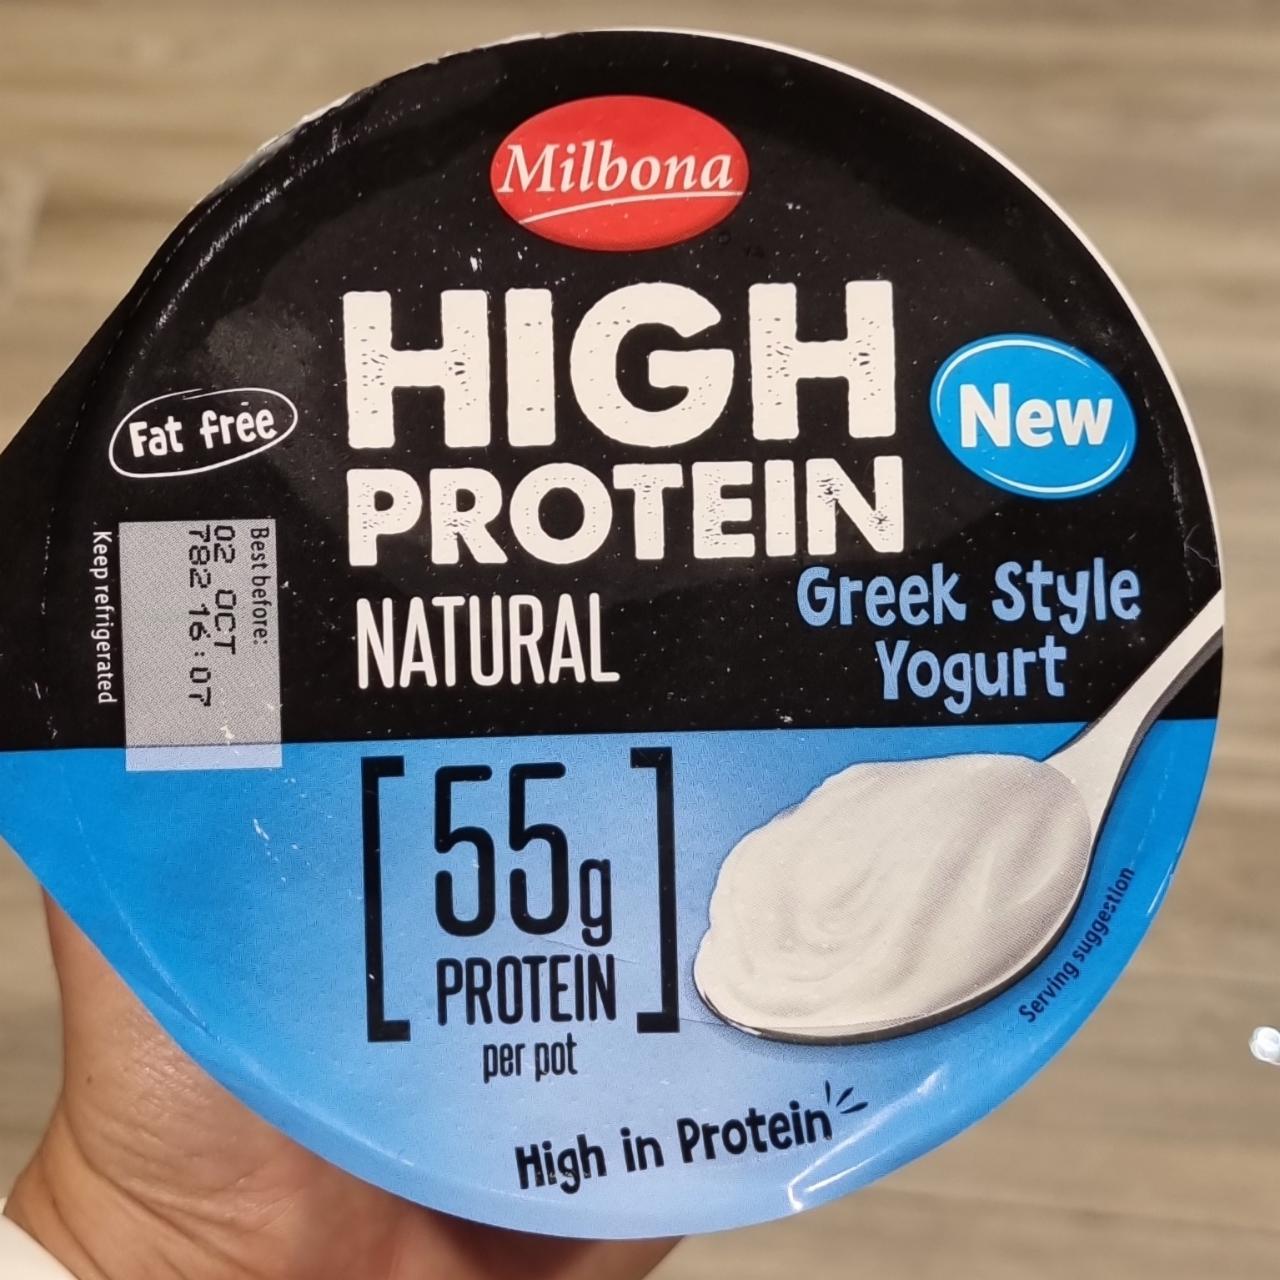 Zdjęcia - High protein Natural Greek style yogurt Milbona